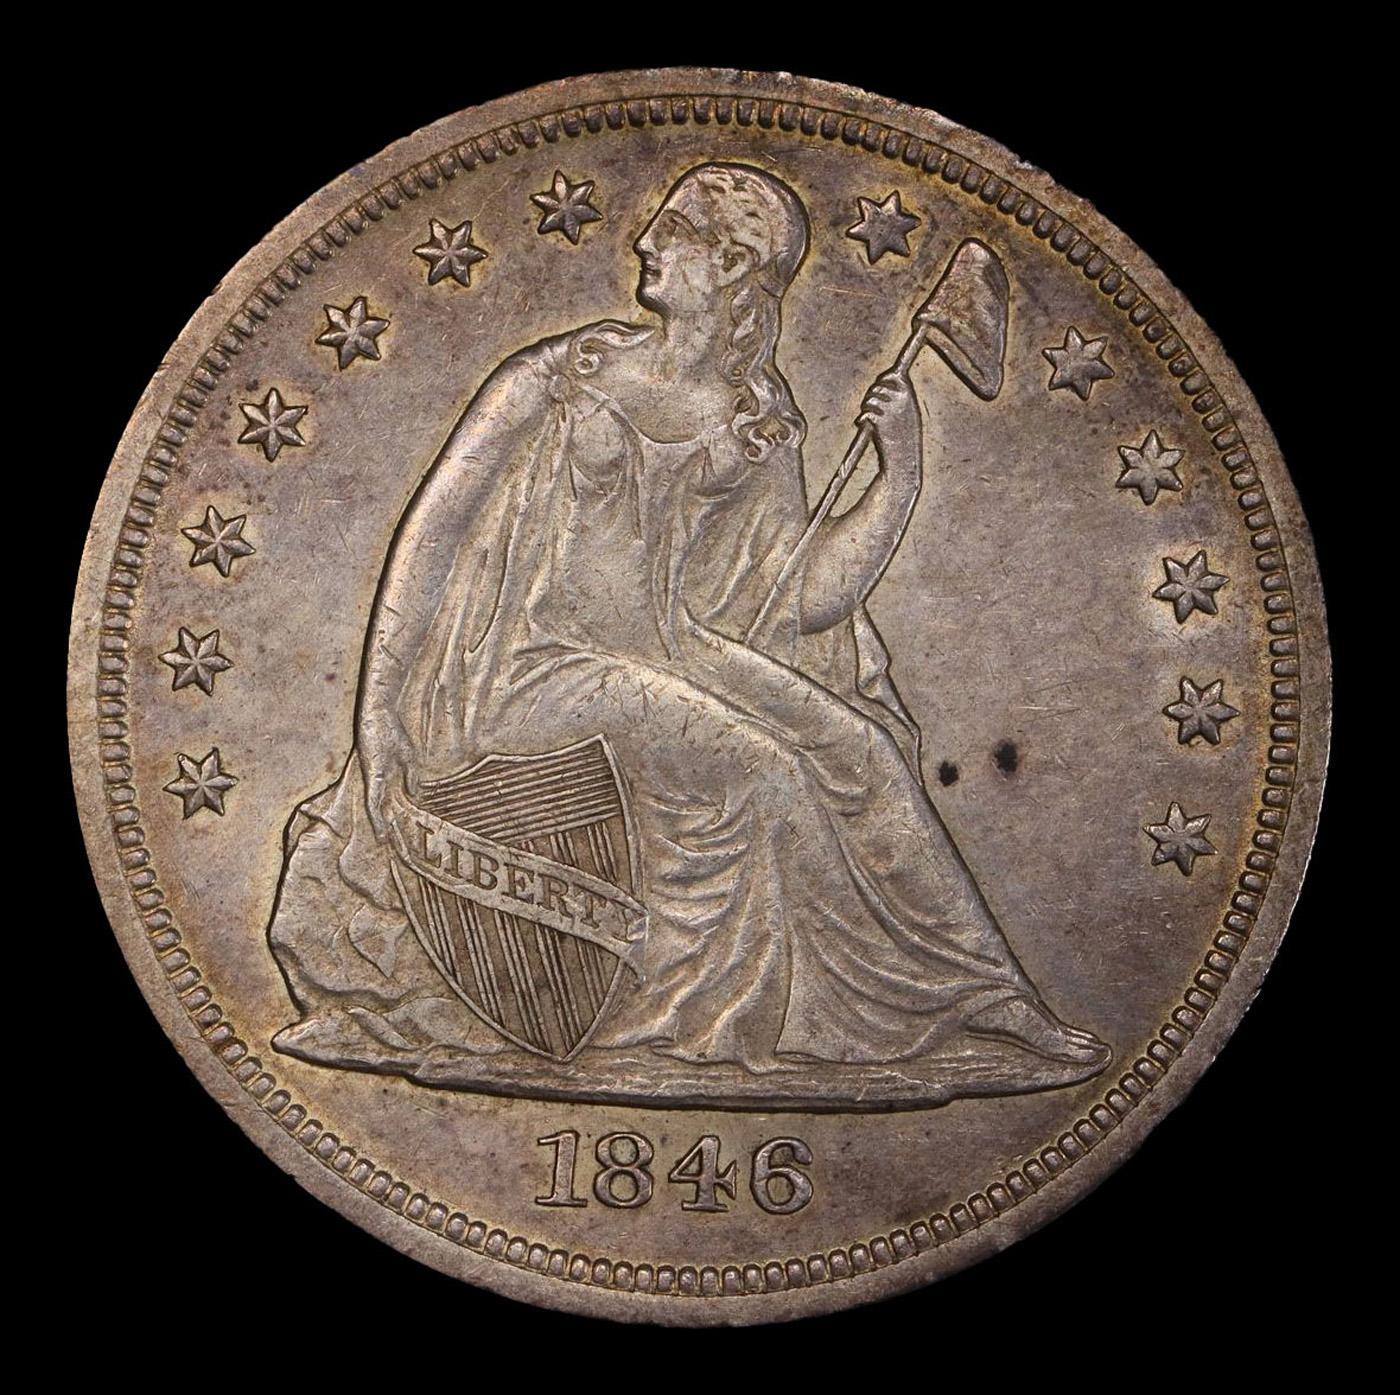 ***Auction Highlight*** 1846-o Seated Liberty Dollar $1 Graded Choice AU/BU Slider+ By SEGS.